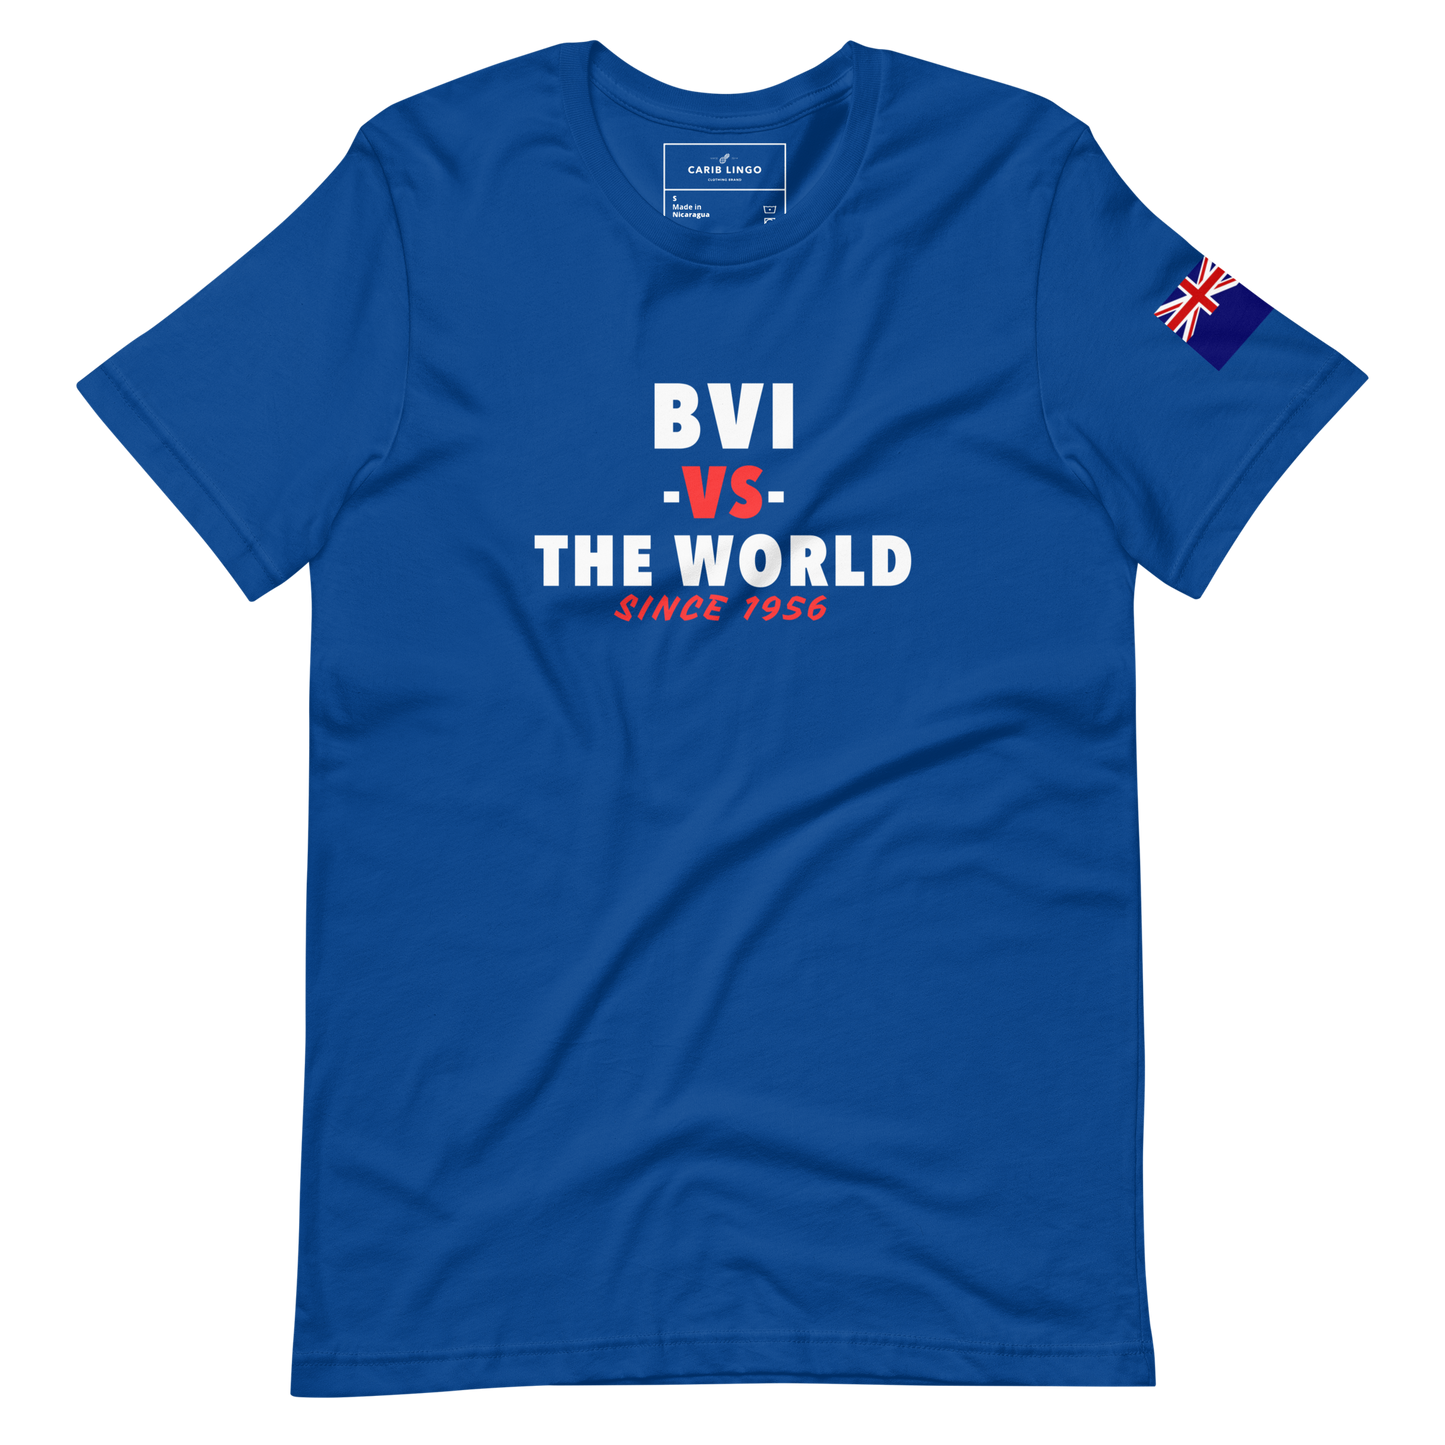 BVI -vs- The World t-shirt